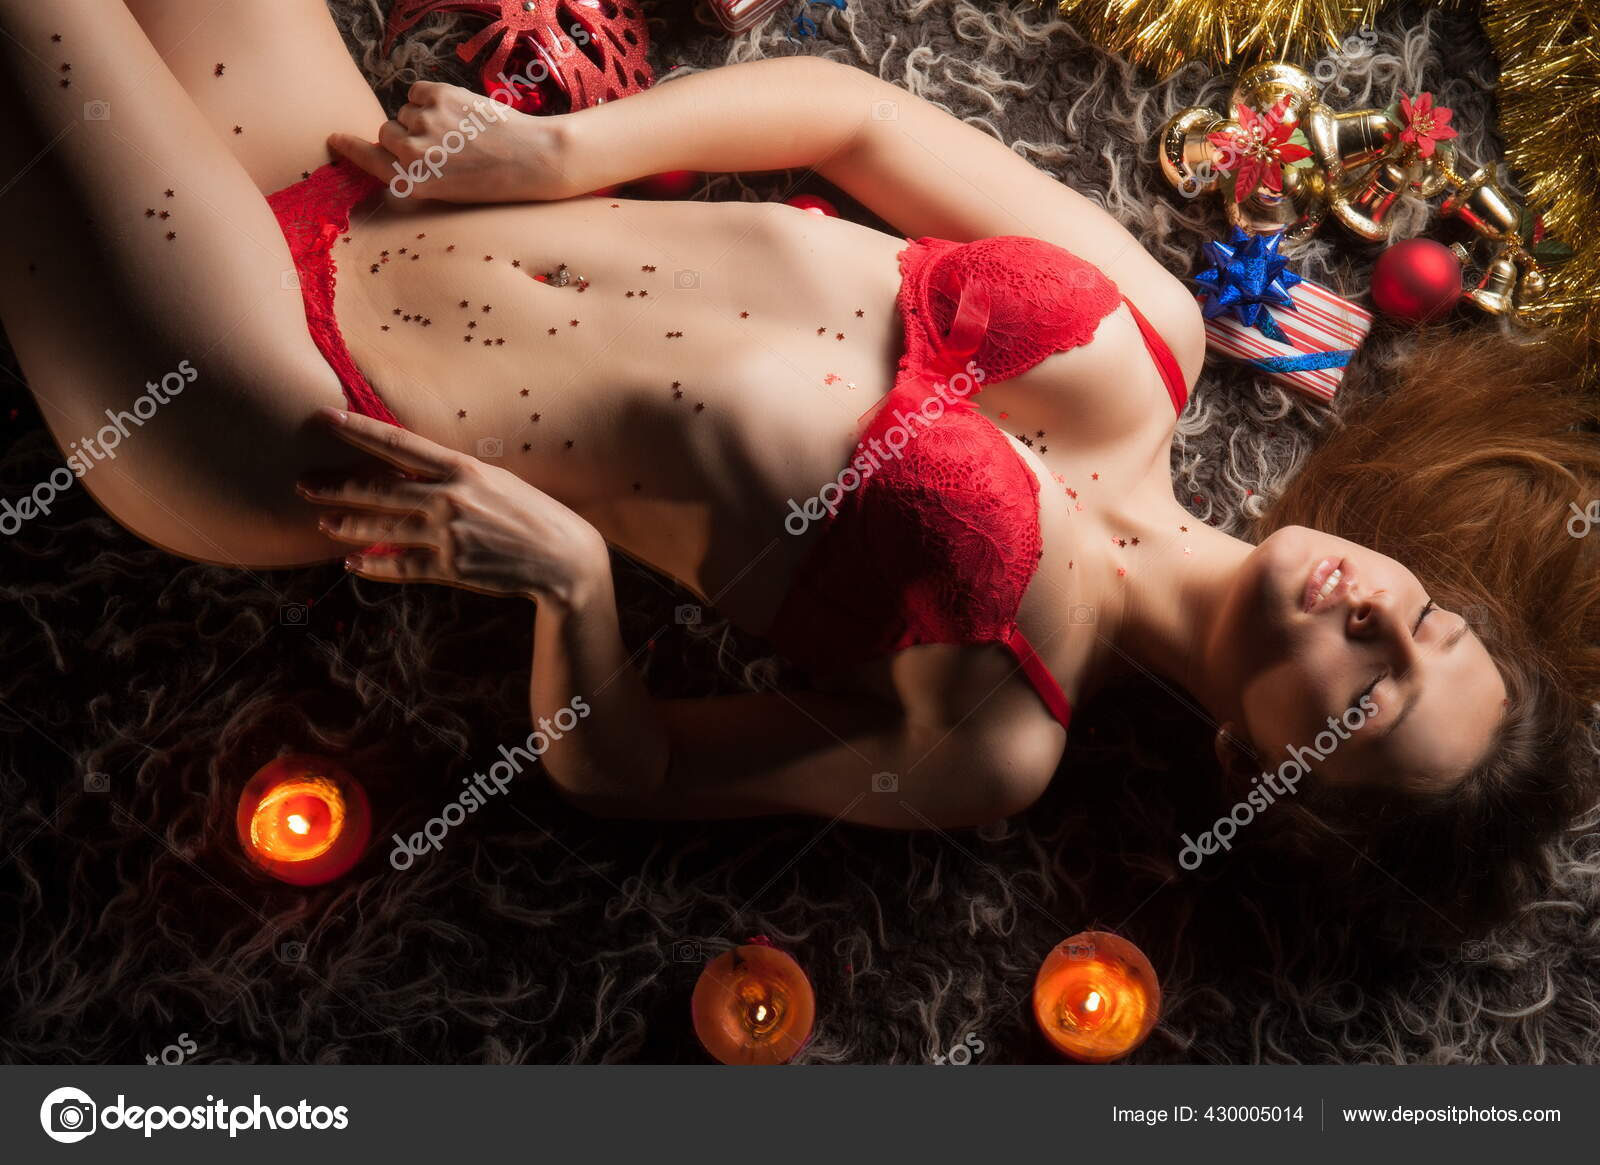 https://st2.depositphotos.com/1012146/43000/i/1600/depositphotos_430005[001-999]-stock-photo-beautiful-sexy-brunette-girl-red.jpg